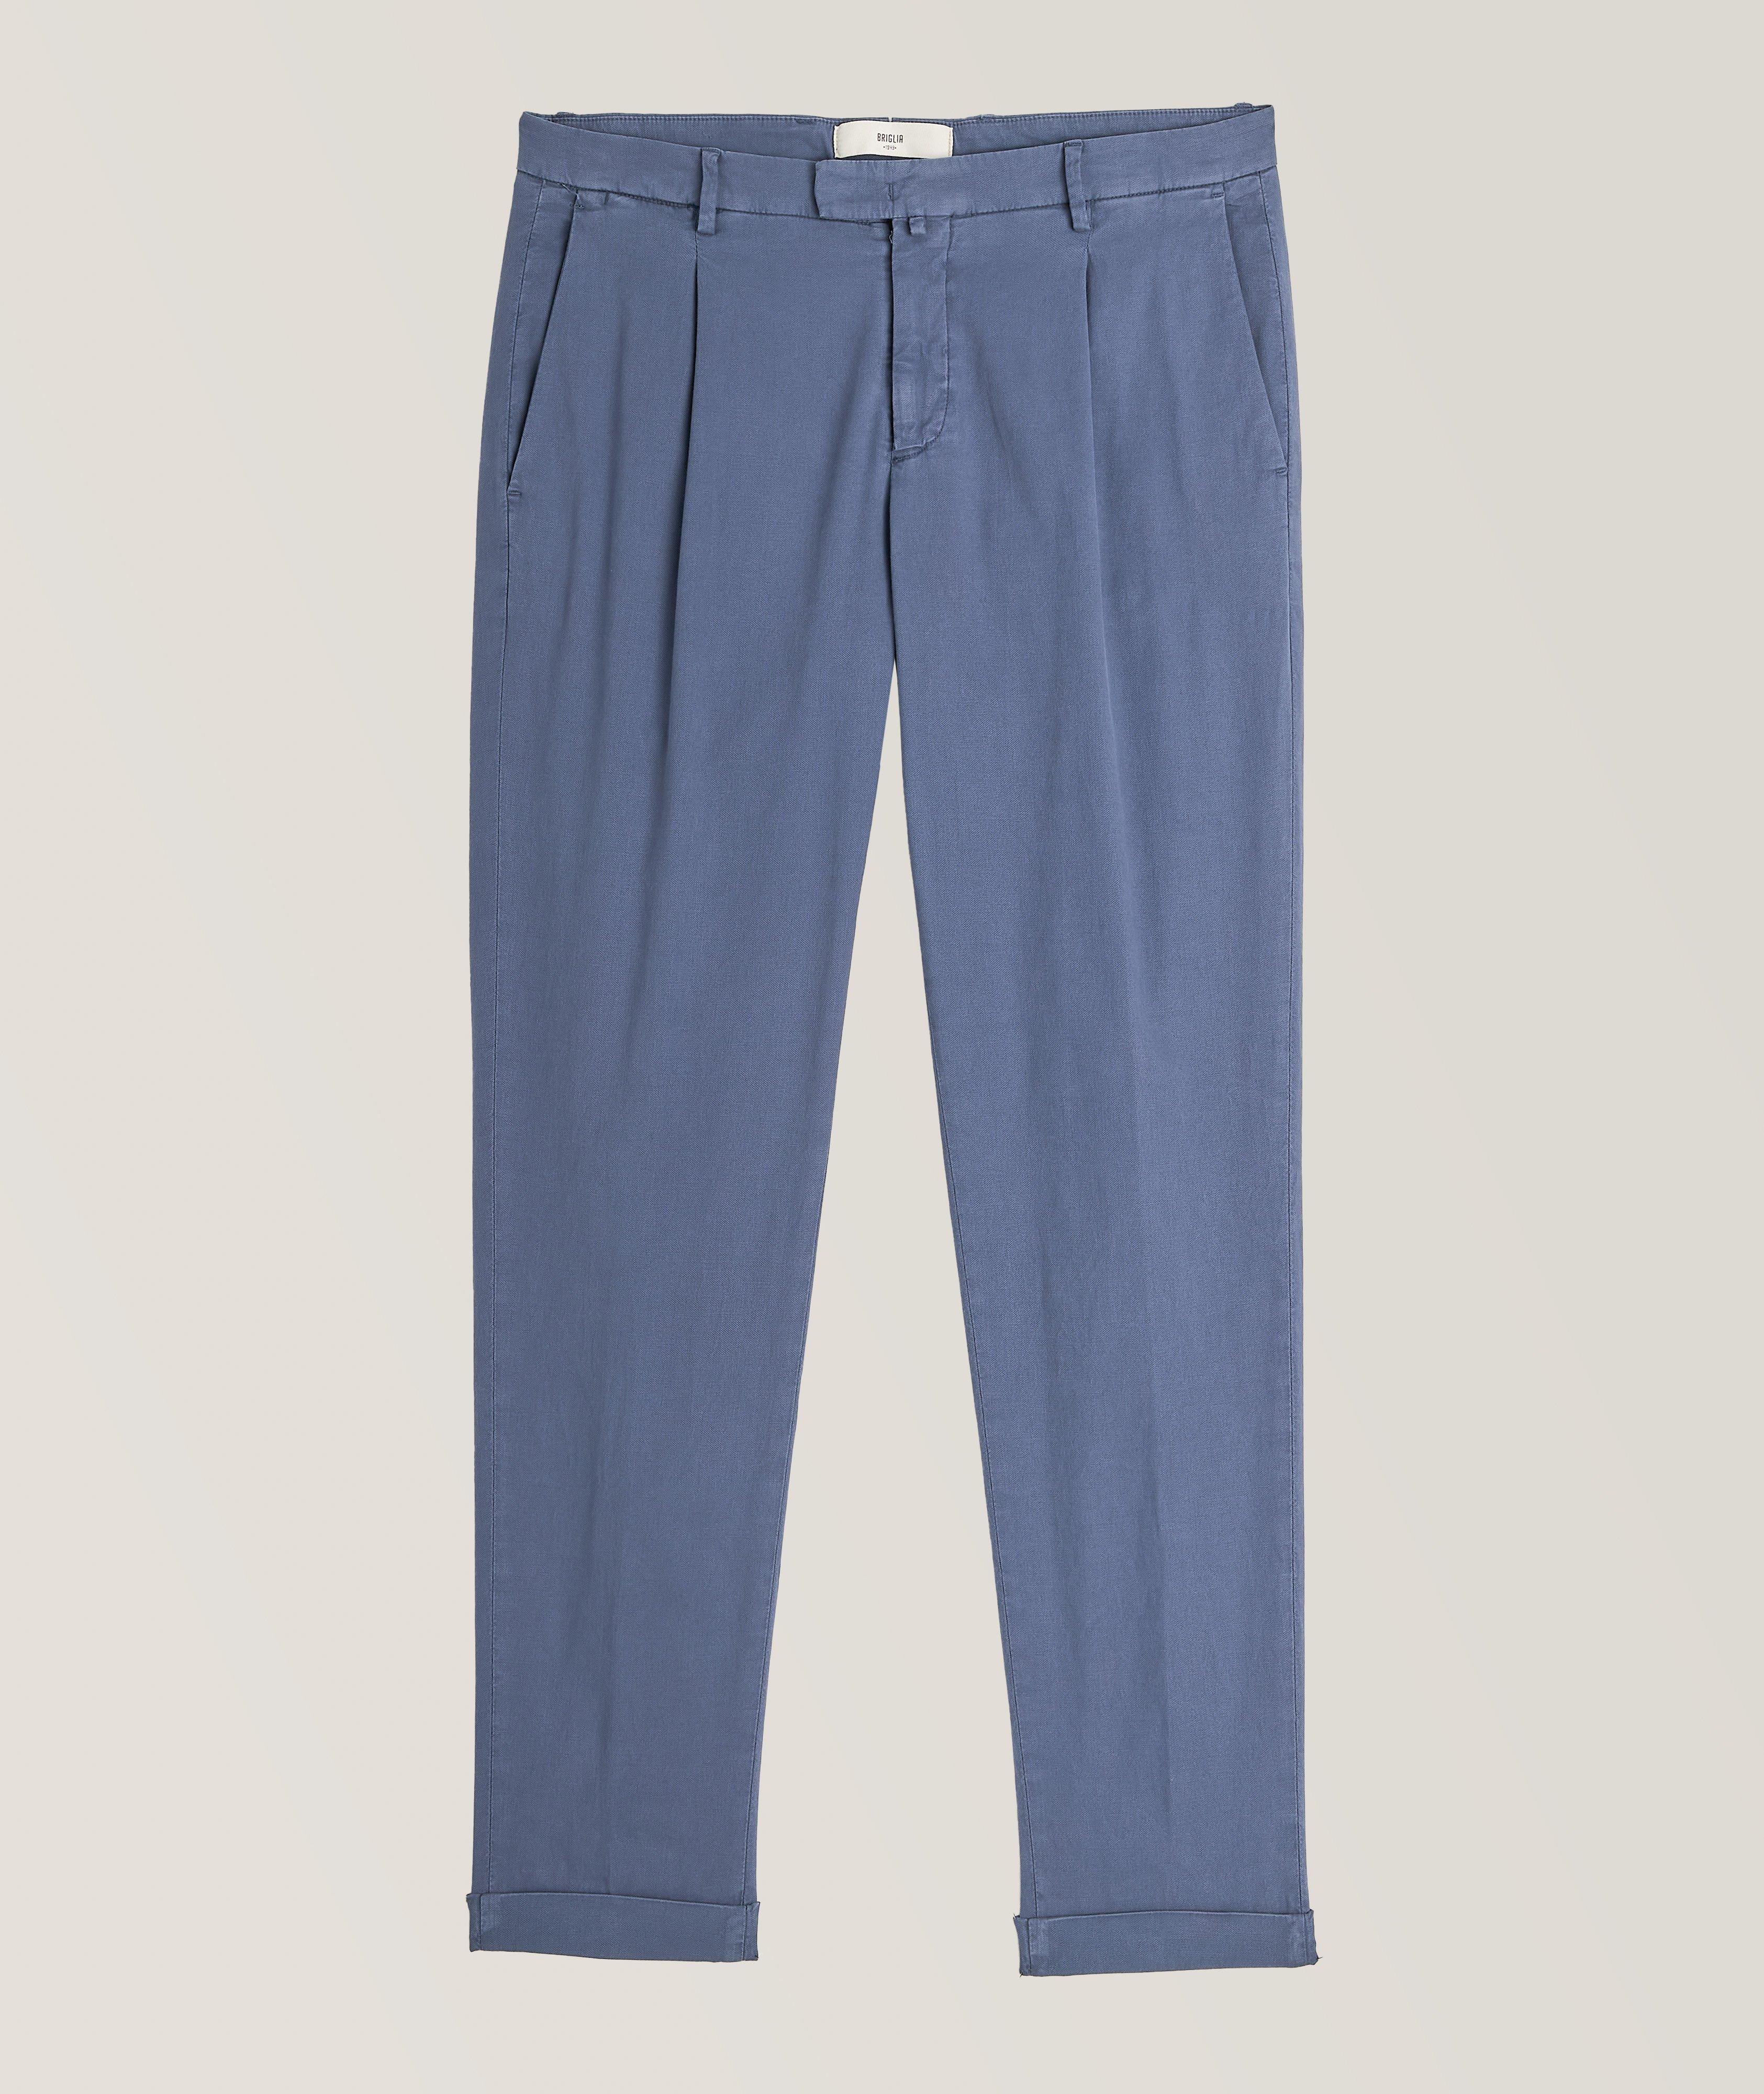 Slim Fit Pleated Cotton-Blend Pants image 0